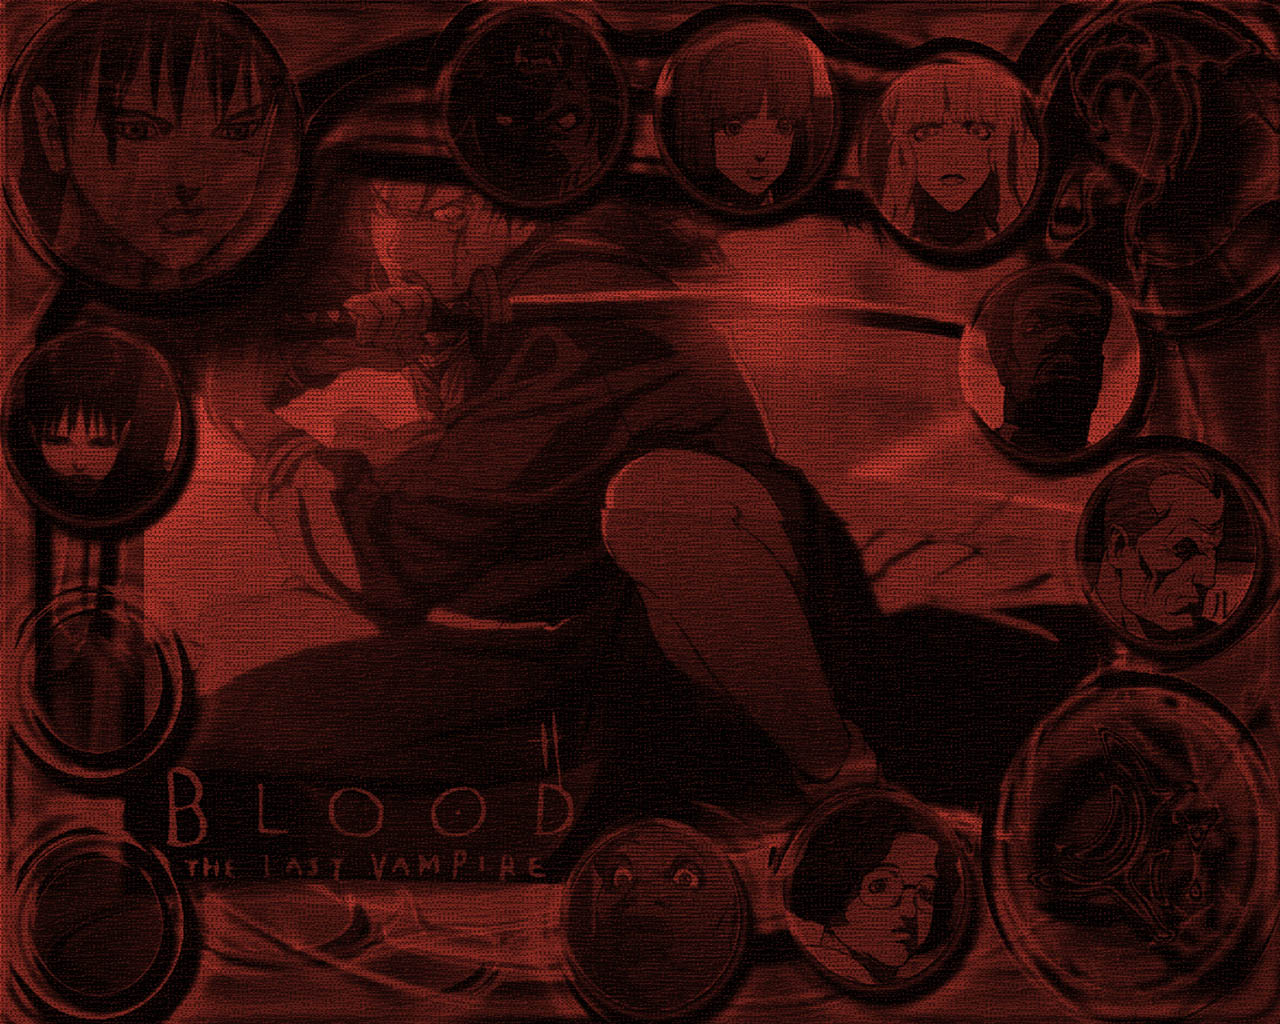 Blood the last vampire 07